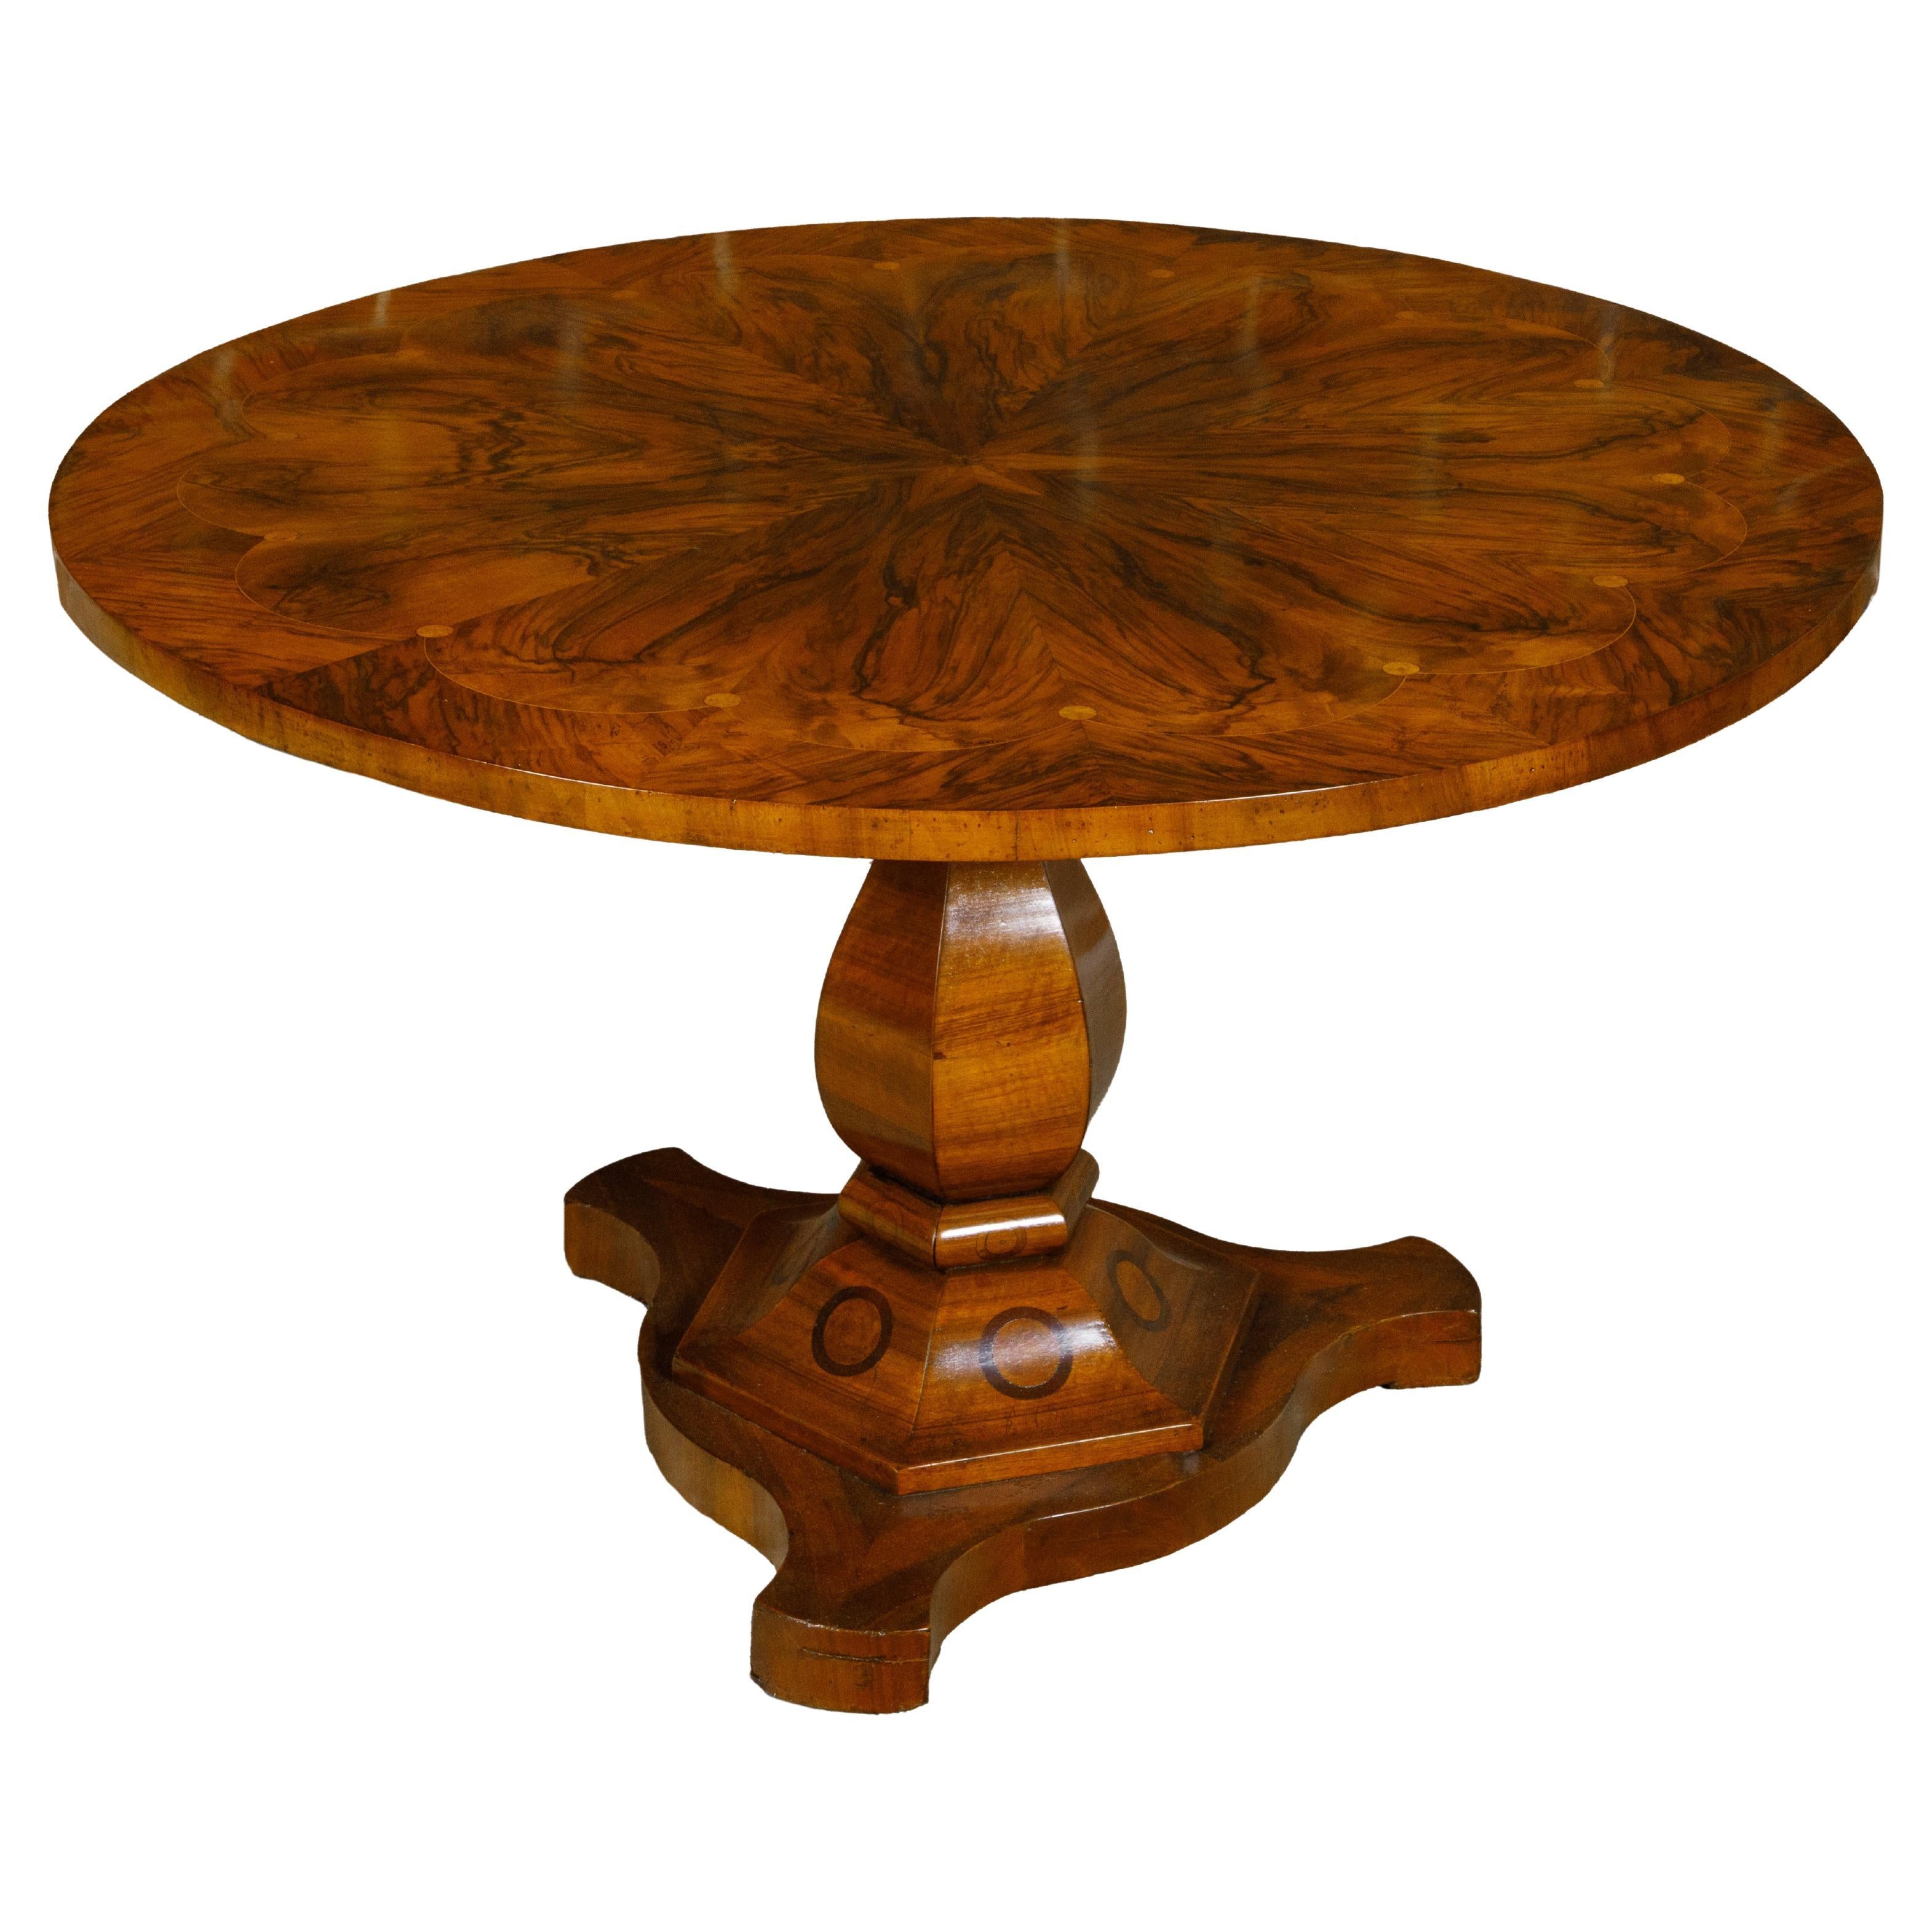 Biedermeier 19th Century Flamed Walnut Pedestal Table with Radiating Motif